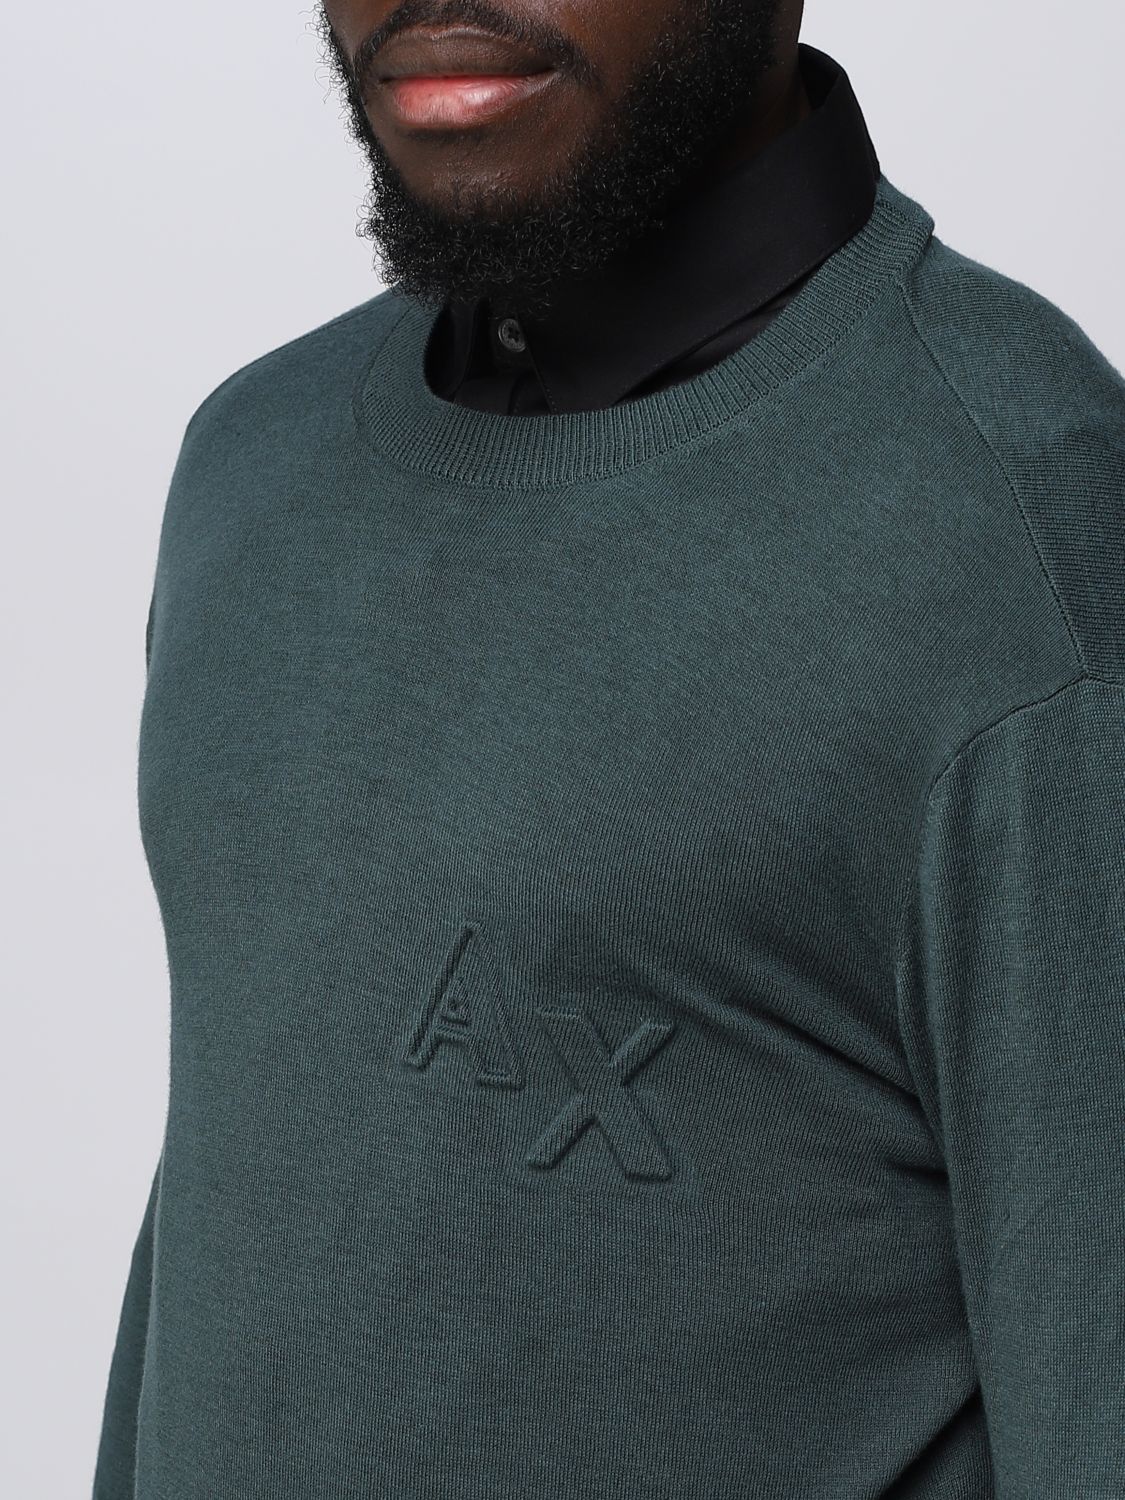 ARMANI EXCHANGE: sweater for man - Green | Armani Exchange sweater  3RZM2ZZMW8Z online on 